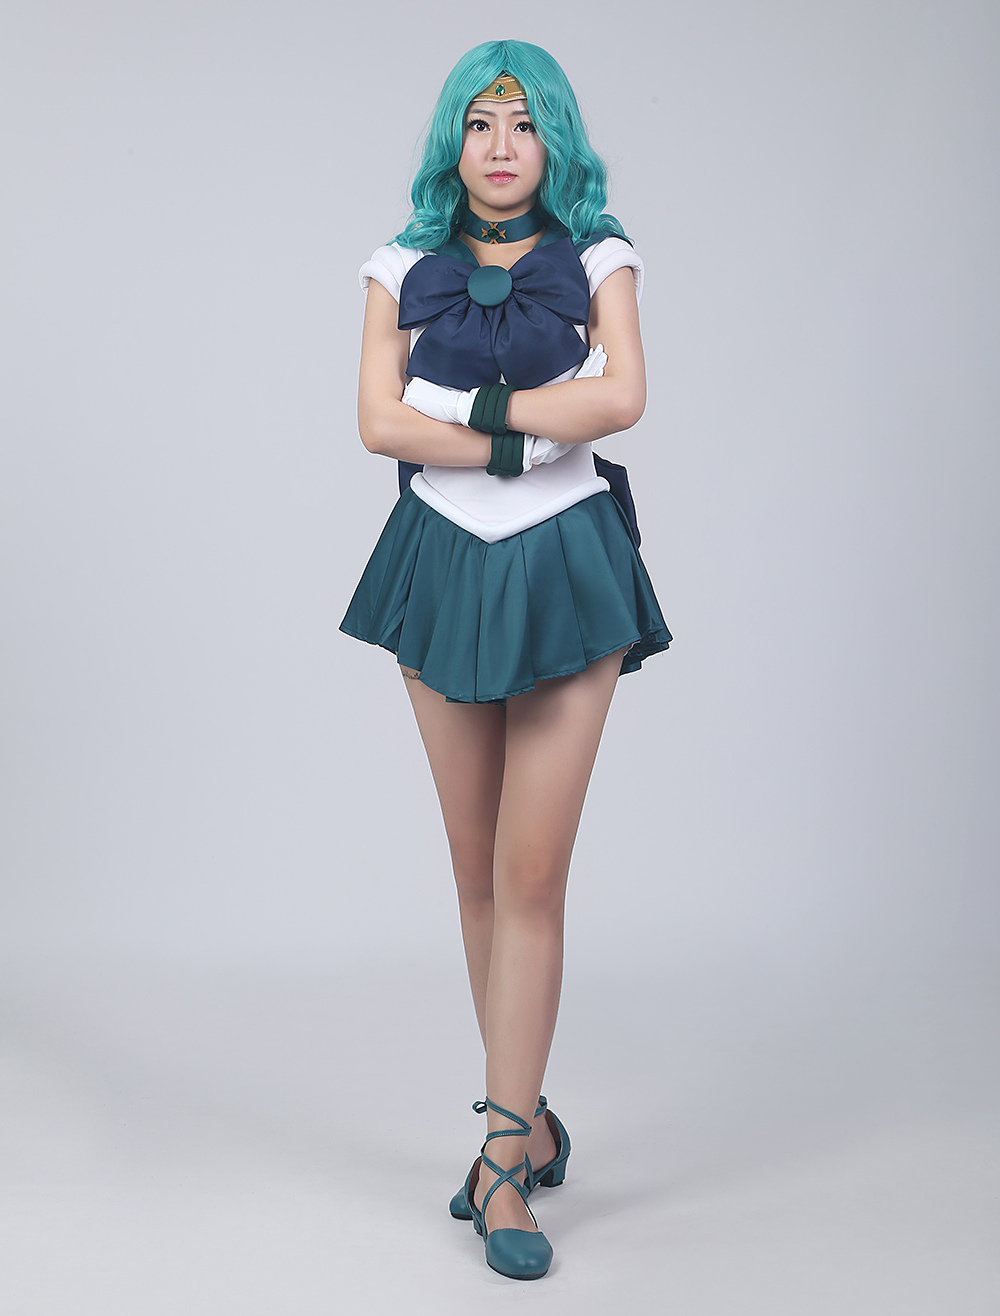 Sailor Neptune cosplay accessory KIT